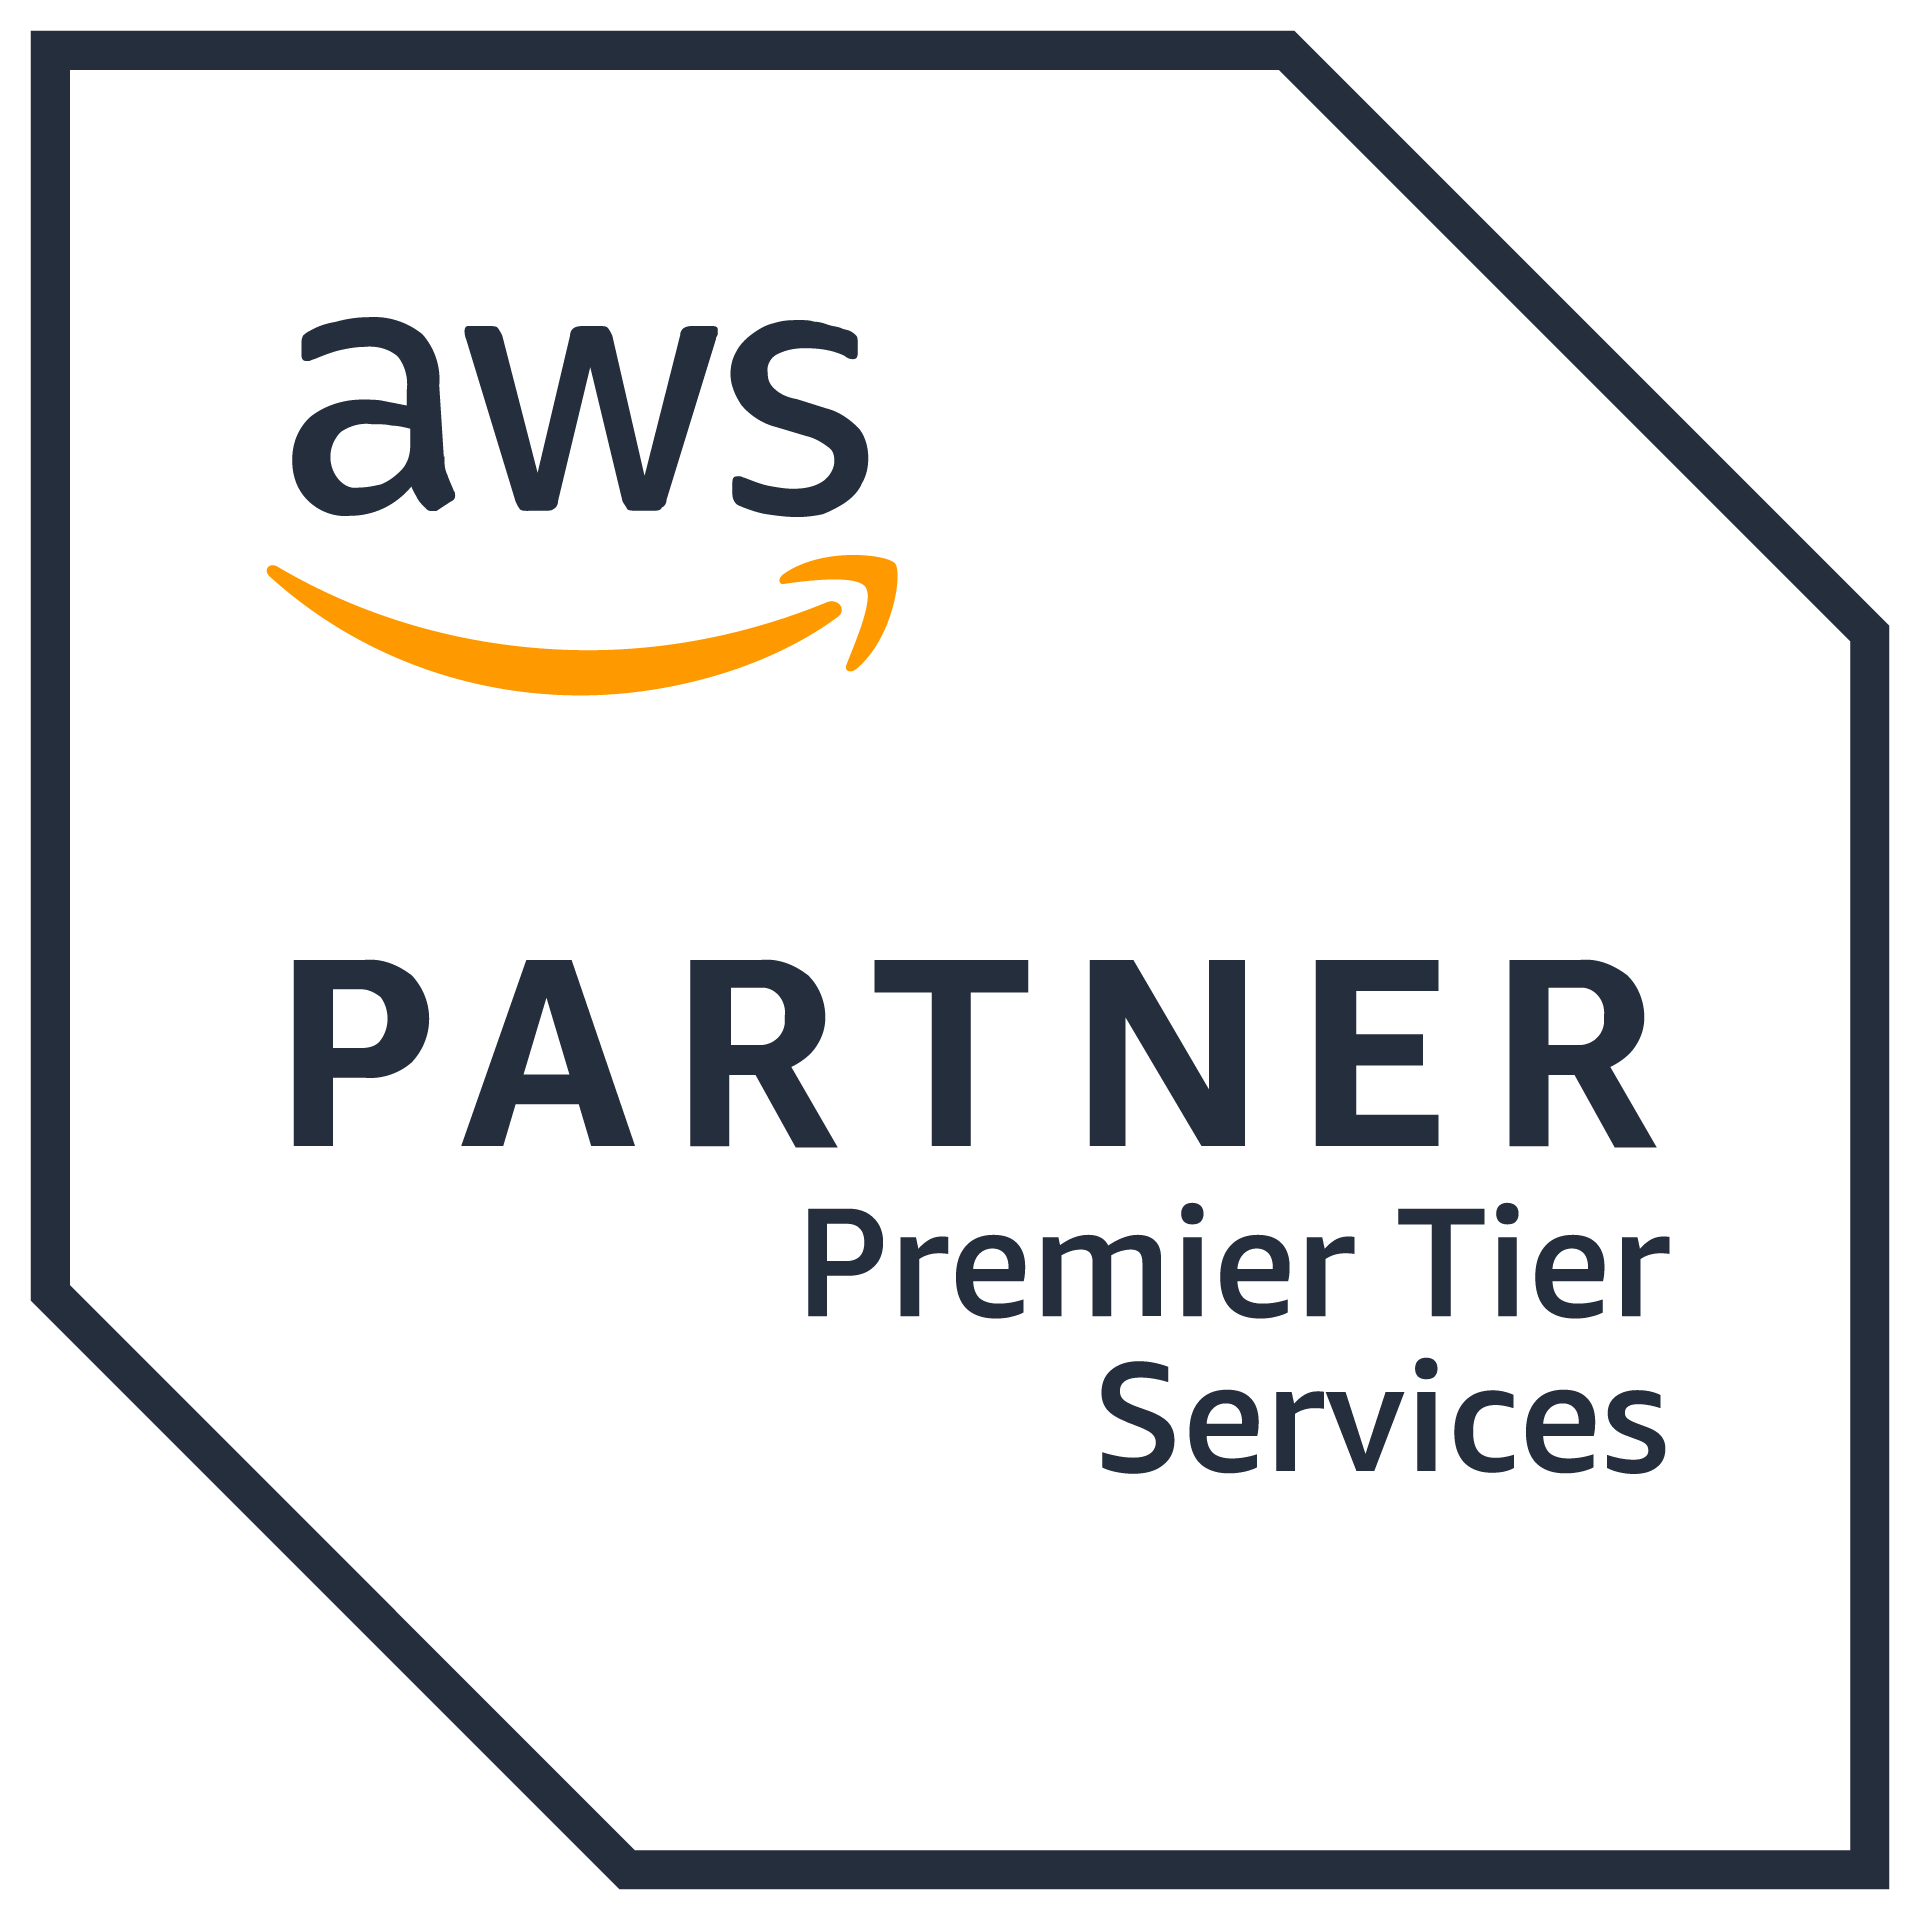 aws-partner-premier-tier-services-logo